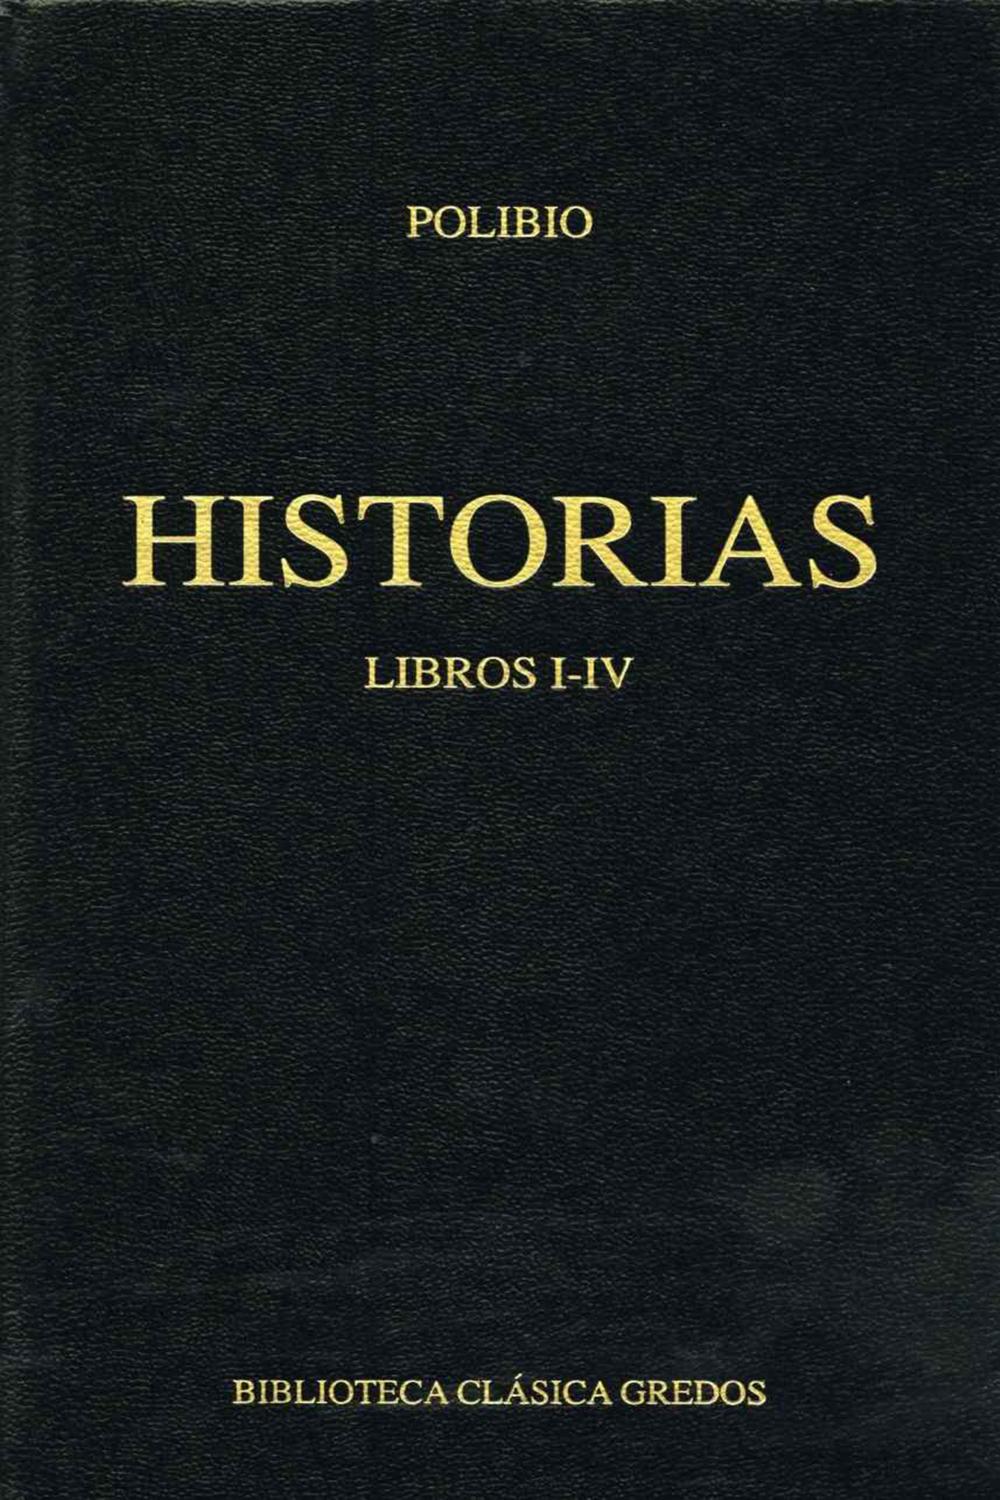 Historias. Libros I-IV - Polibio,Manuel Balasch Recort, Juan Manuel Guzm?n Hermida,